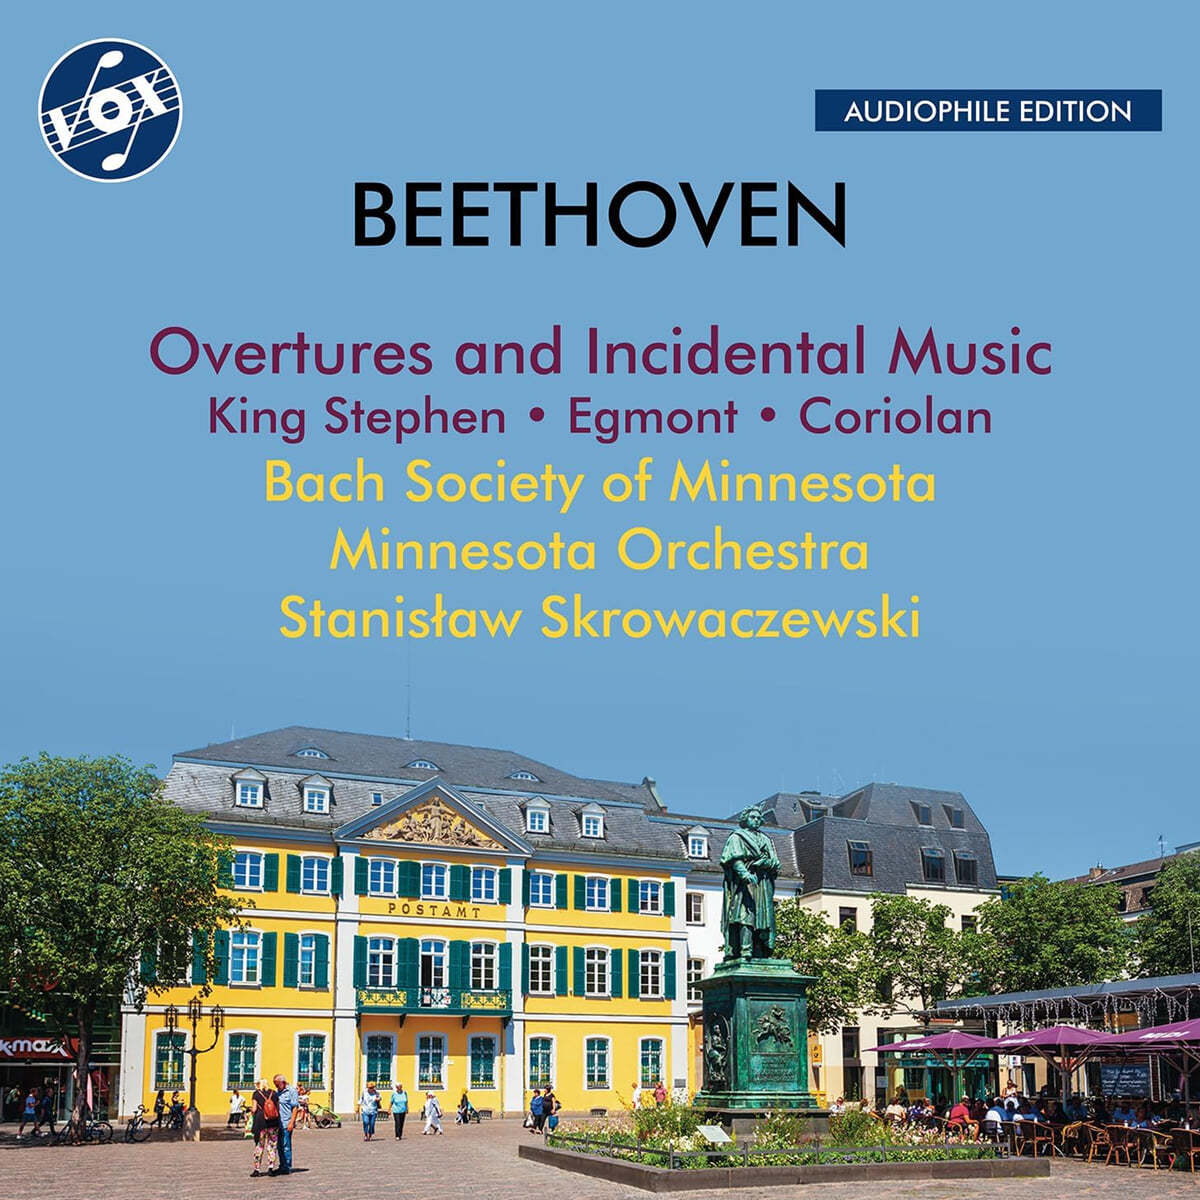 Stanislaw Skrowaczewski 베토벤: 서곡과 부수음악 작품집 (Beethoven: Overtures and Incidental Music)